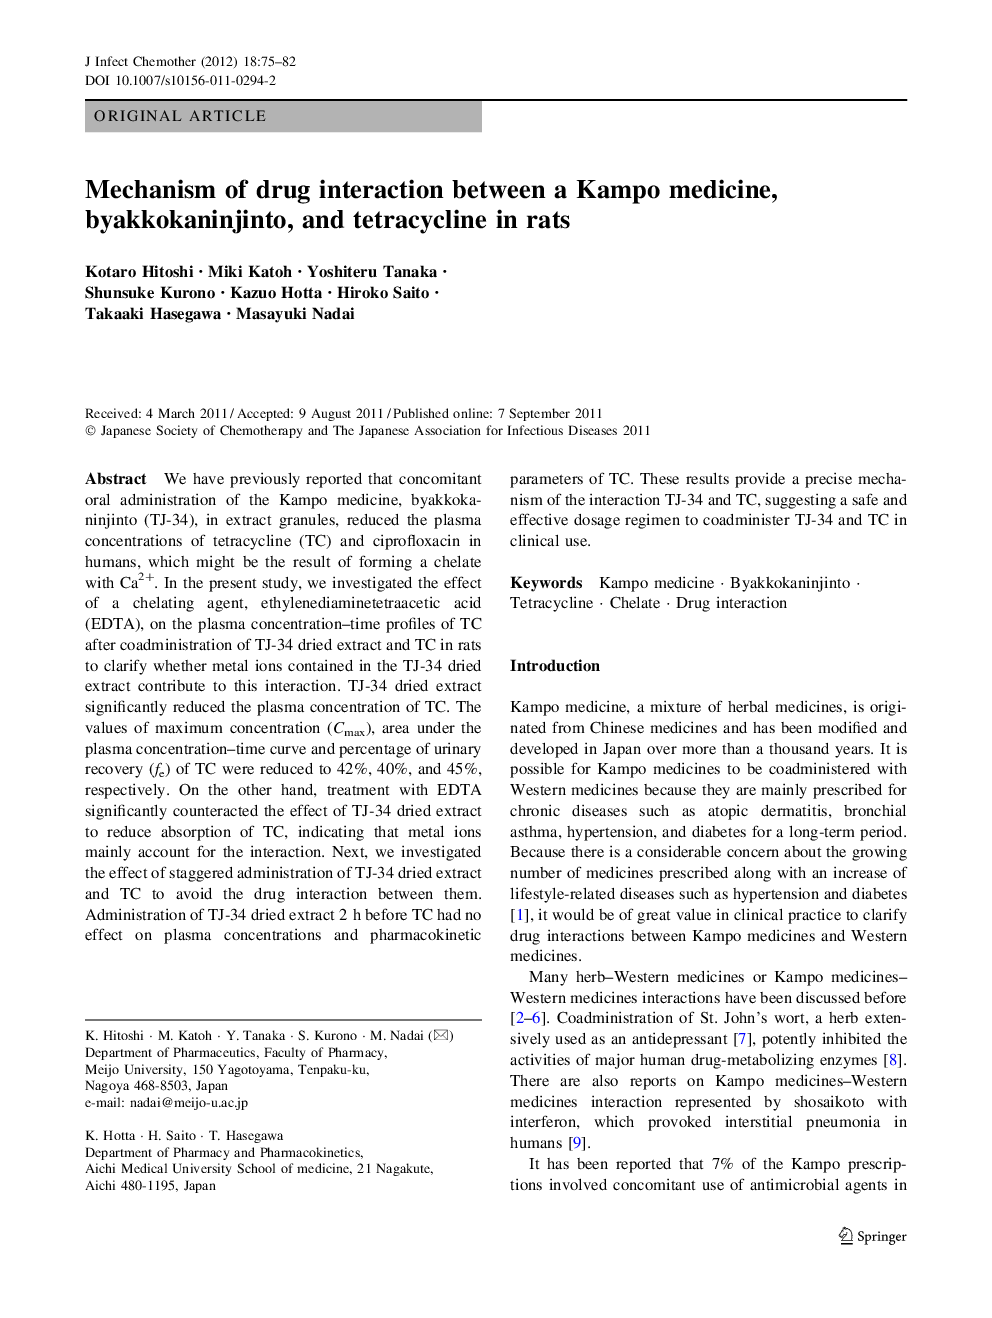 Mechanism of drug interaction between a Kampo medicine, byakkokaninjinto, and tetracycline in rats